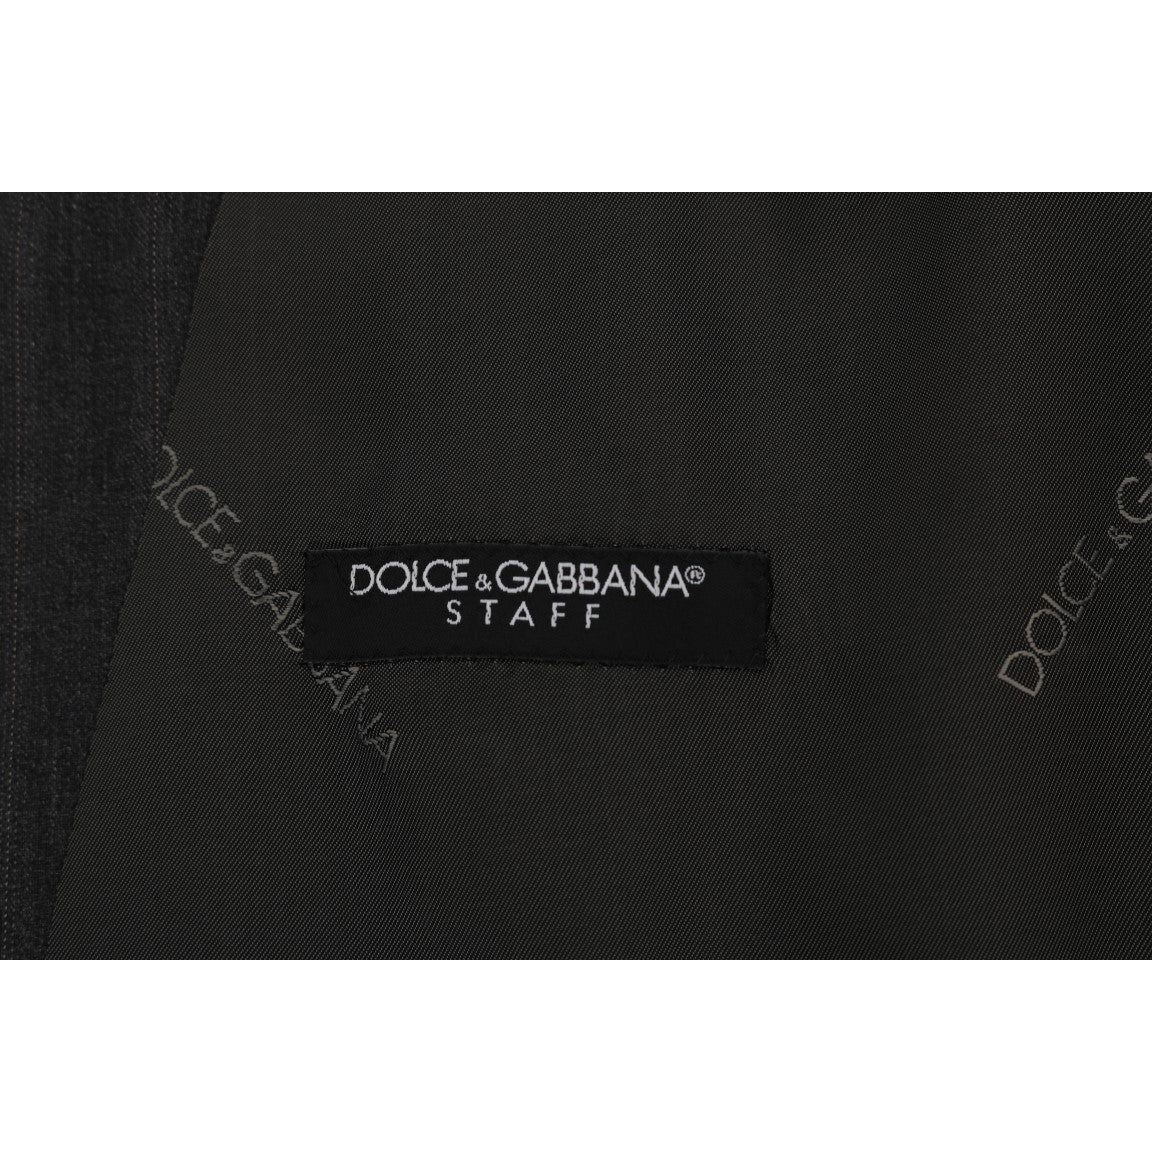 Dolce & Gabbana Elegant Gray Striped Single Breasted Vest gray-staff-wool-stretch-vest 498895-gray-staff-wool-stretch-vest-5.jpg